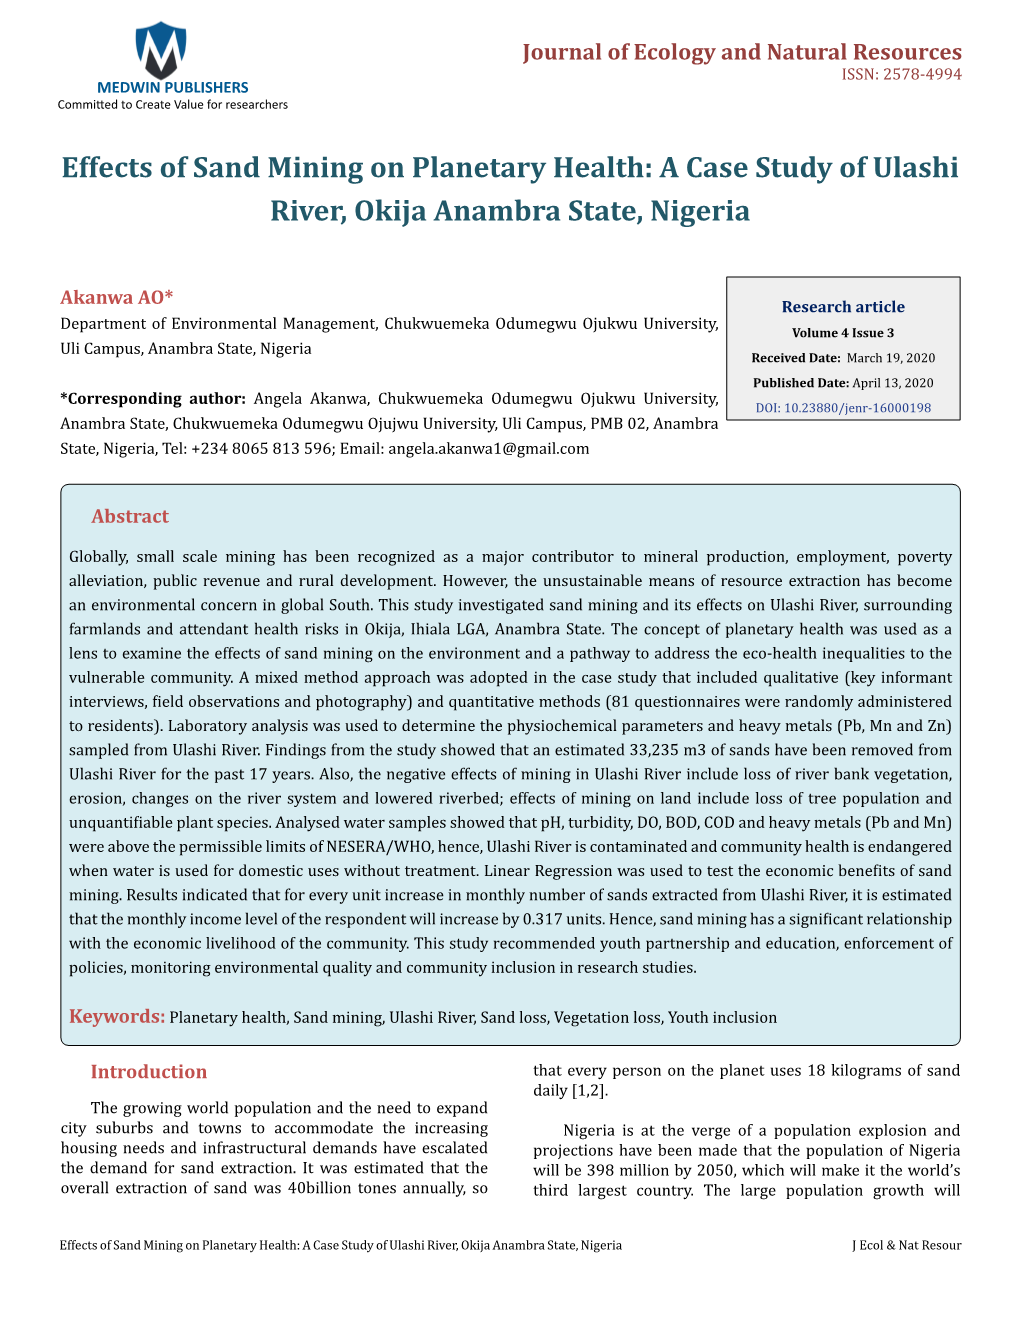 Akanwa AO. Effects of Sand Mining on Planetary Health: a Case Study of Ulashi River, Okija Anambra State, Nigeria. J Ecol &